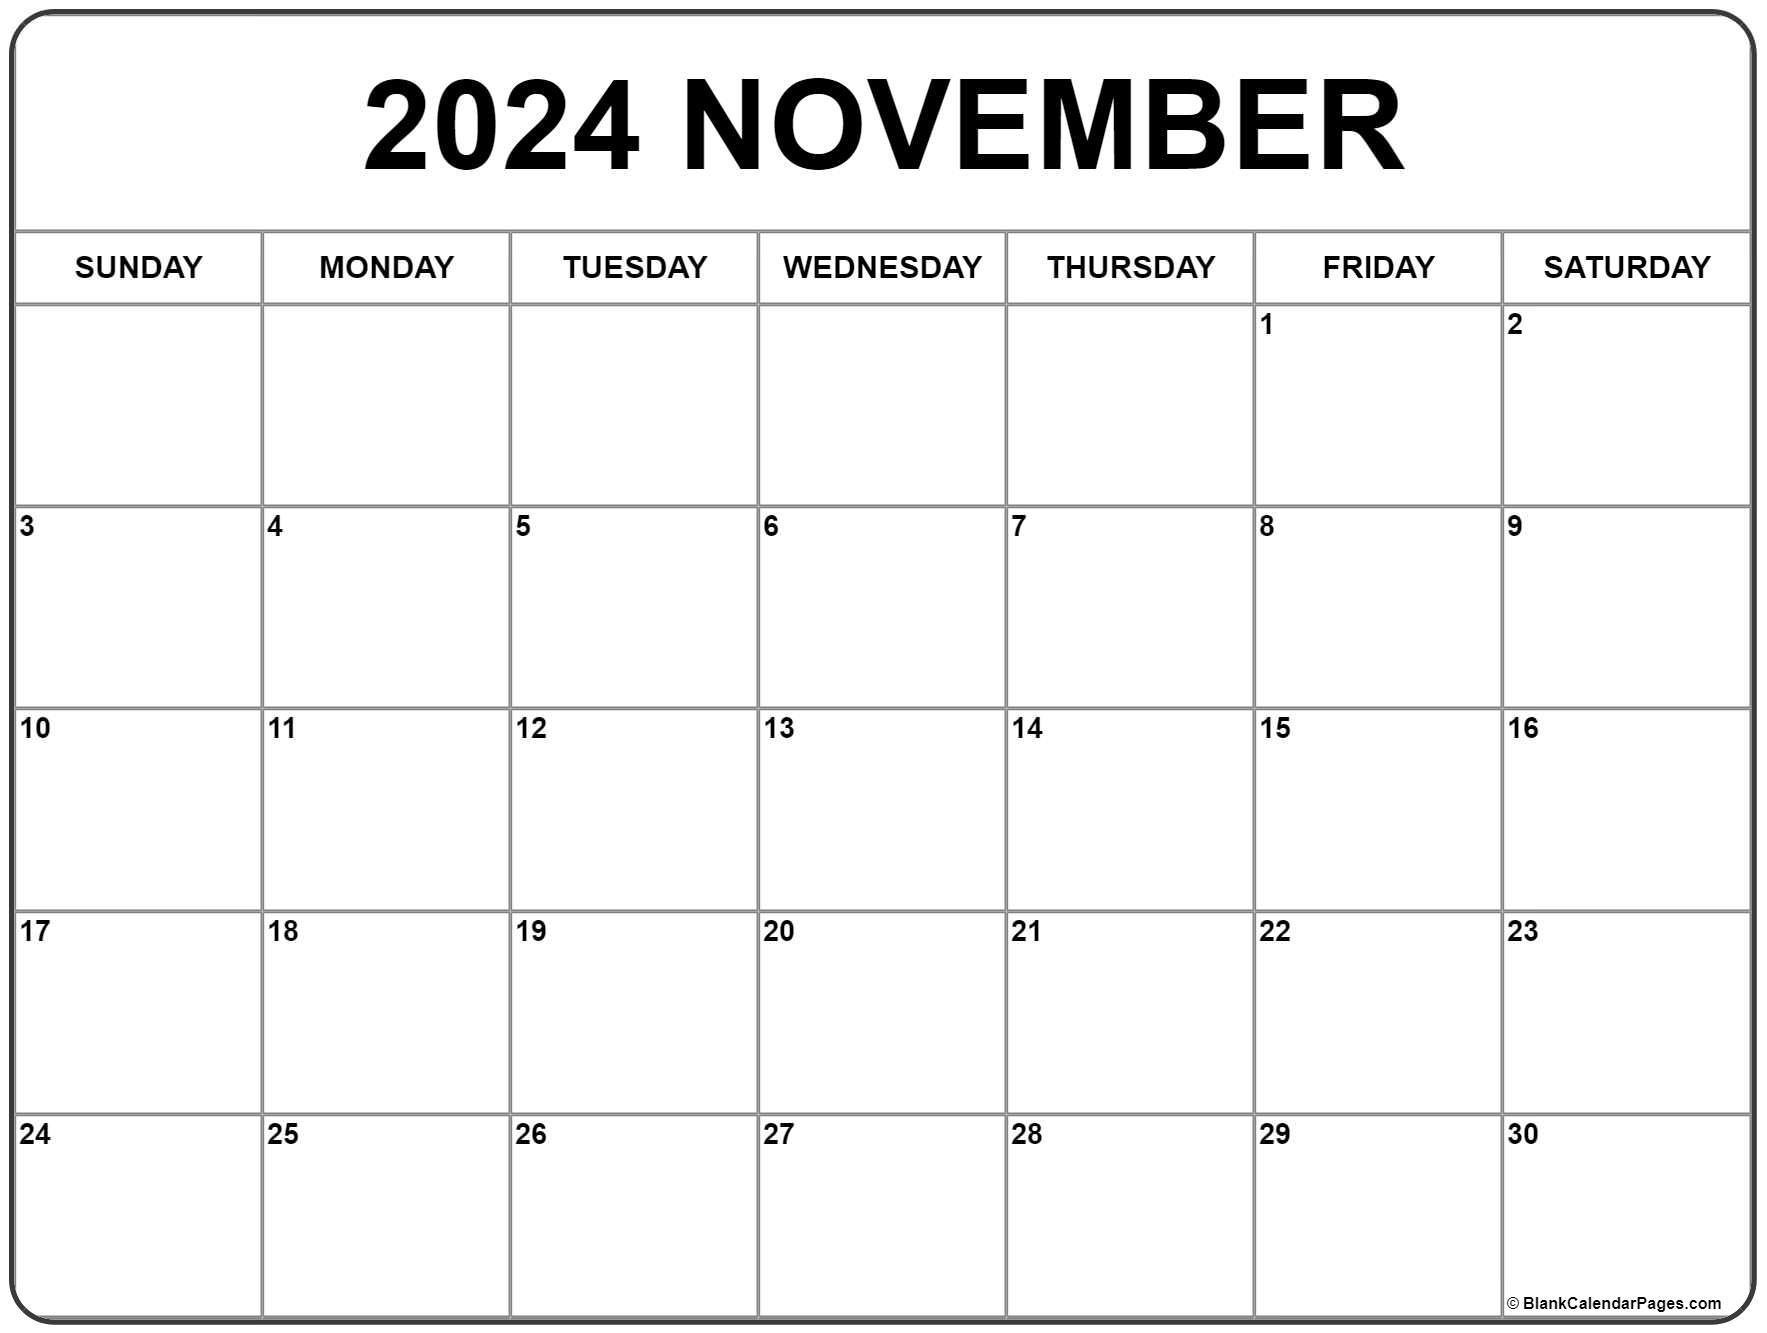 November 2024 Calendar | Free Printable Calendar within Free Printable Calendar 2024 November